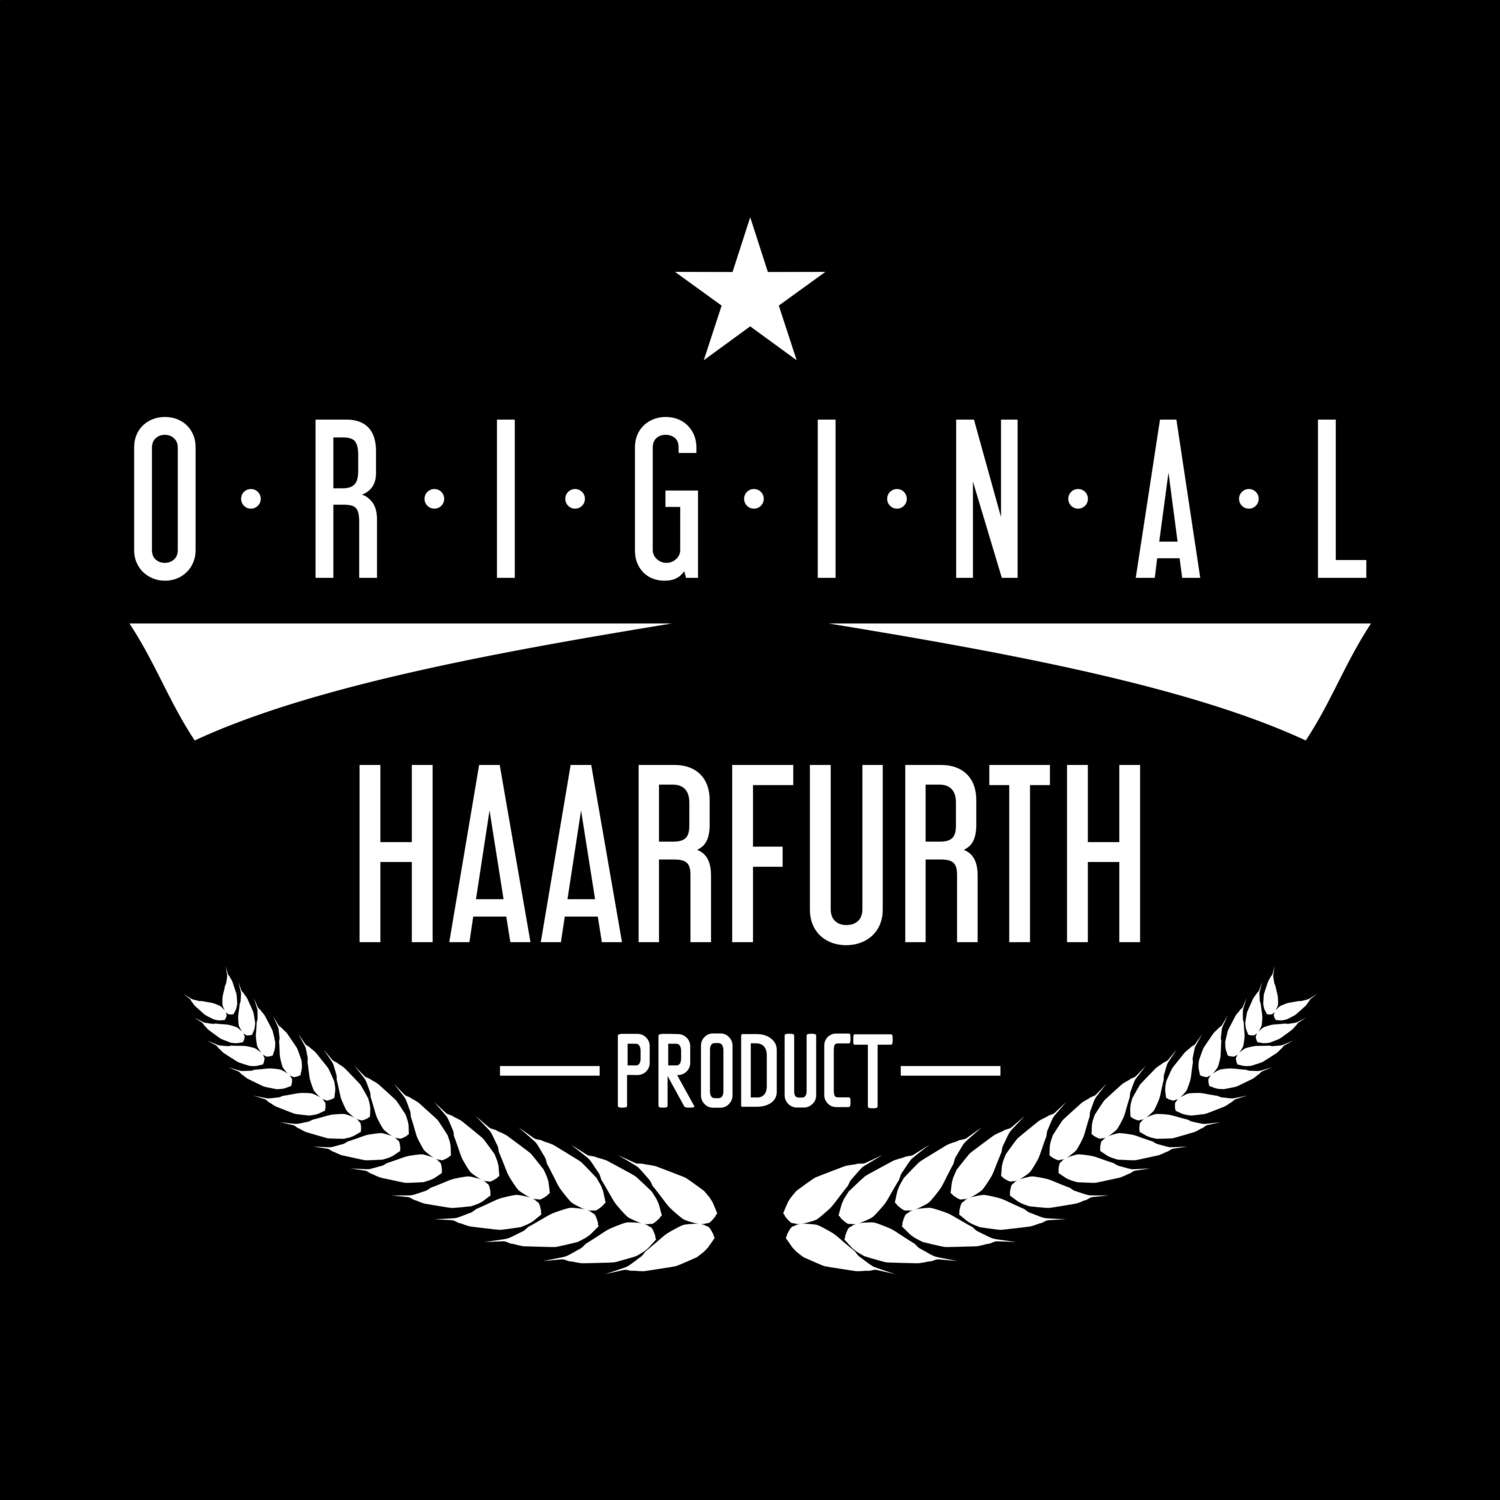 Haarfurth T-Shirt »Original Product«